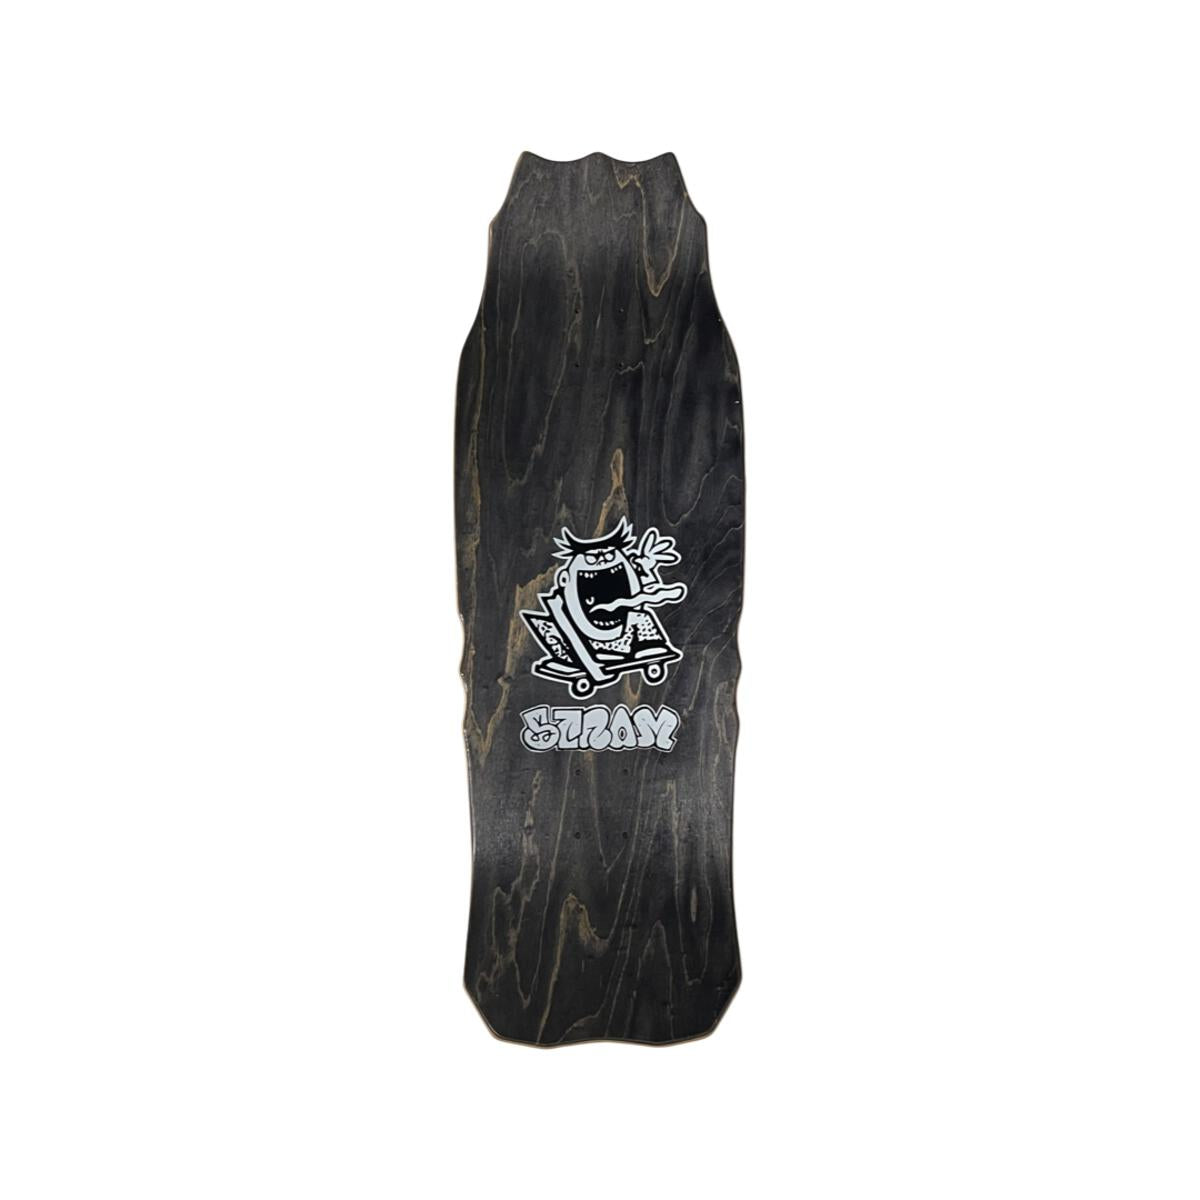 Scram Skateboards "Hoison Sauce" 10.5" Deck